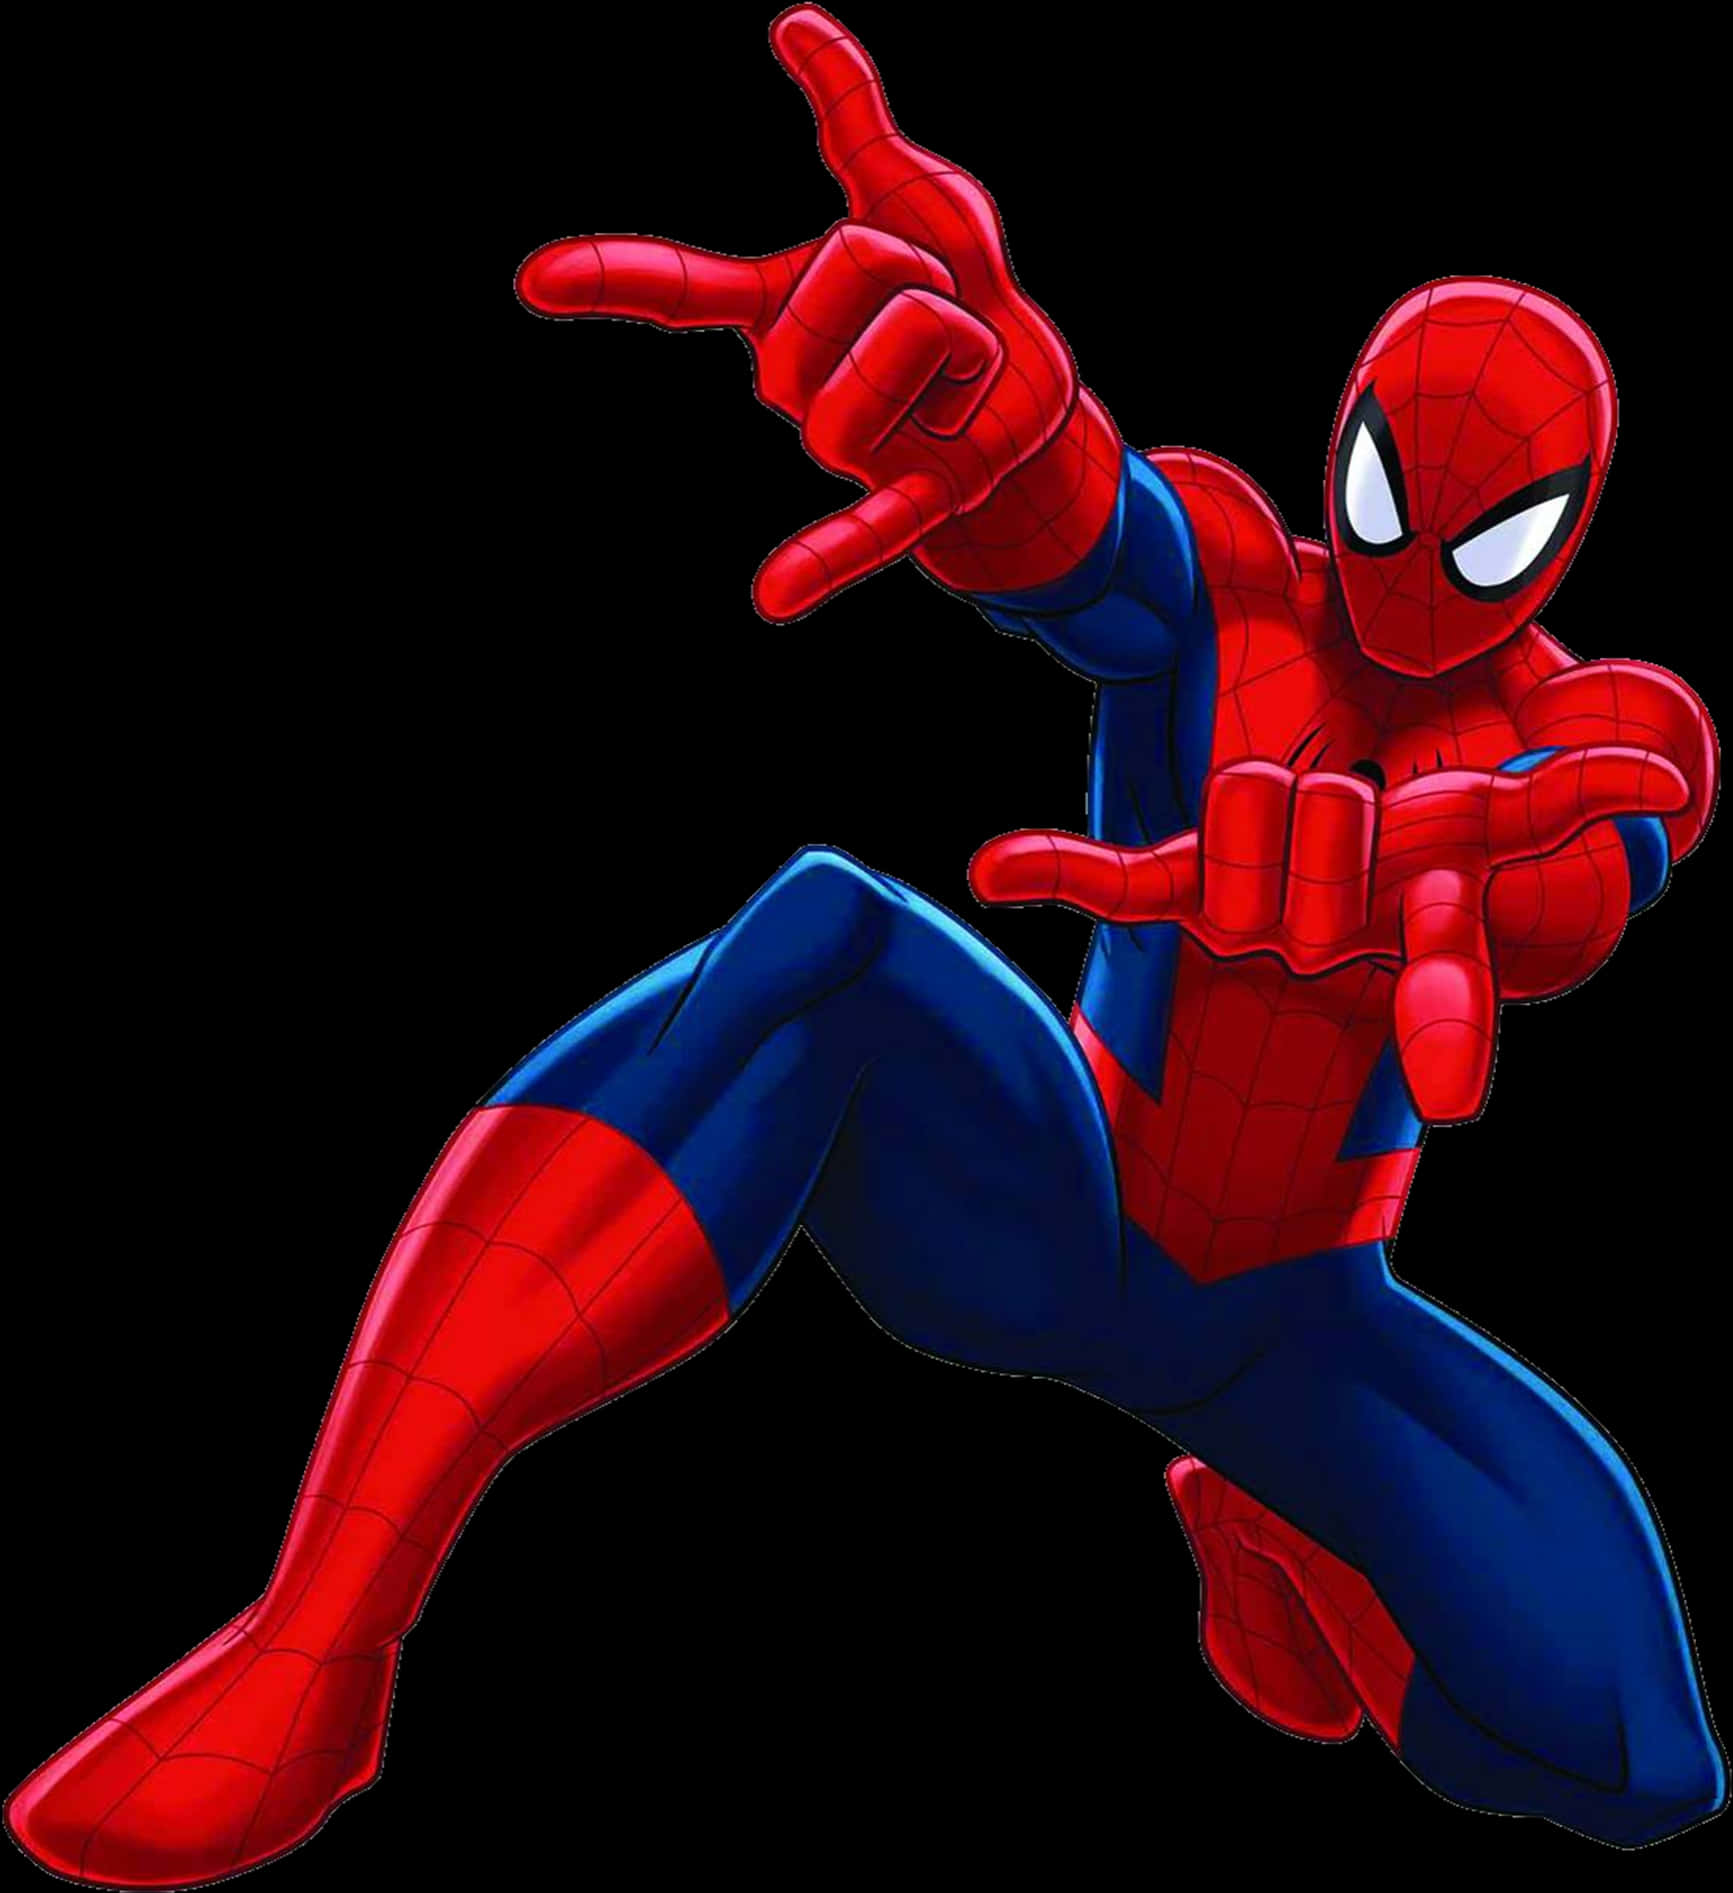 Spiderman Web Shooting Pose